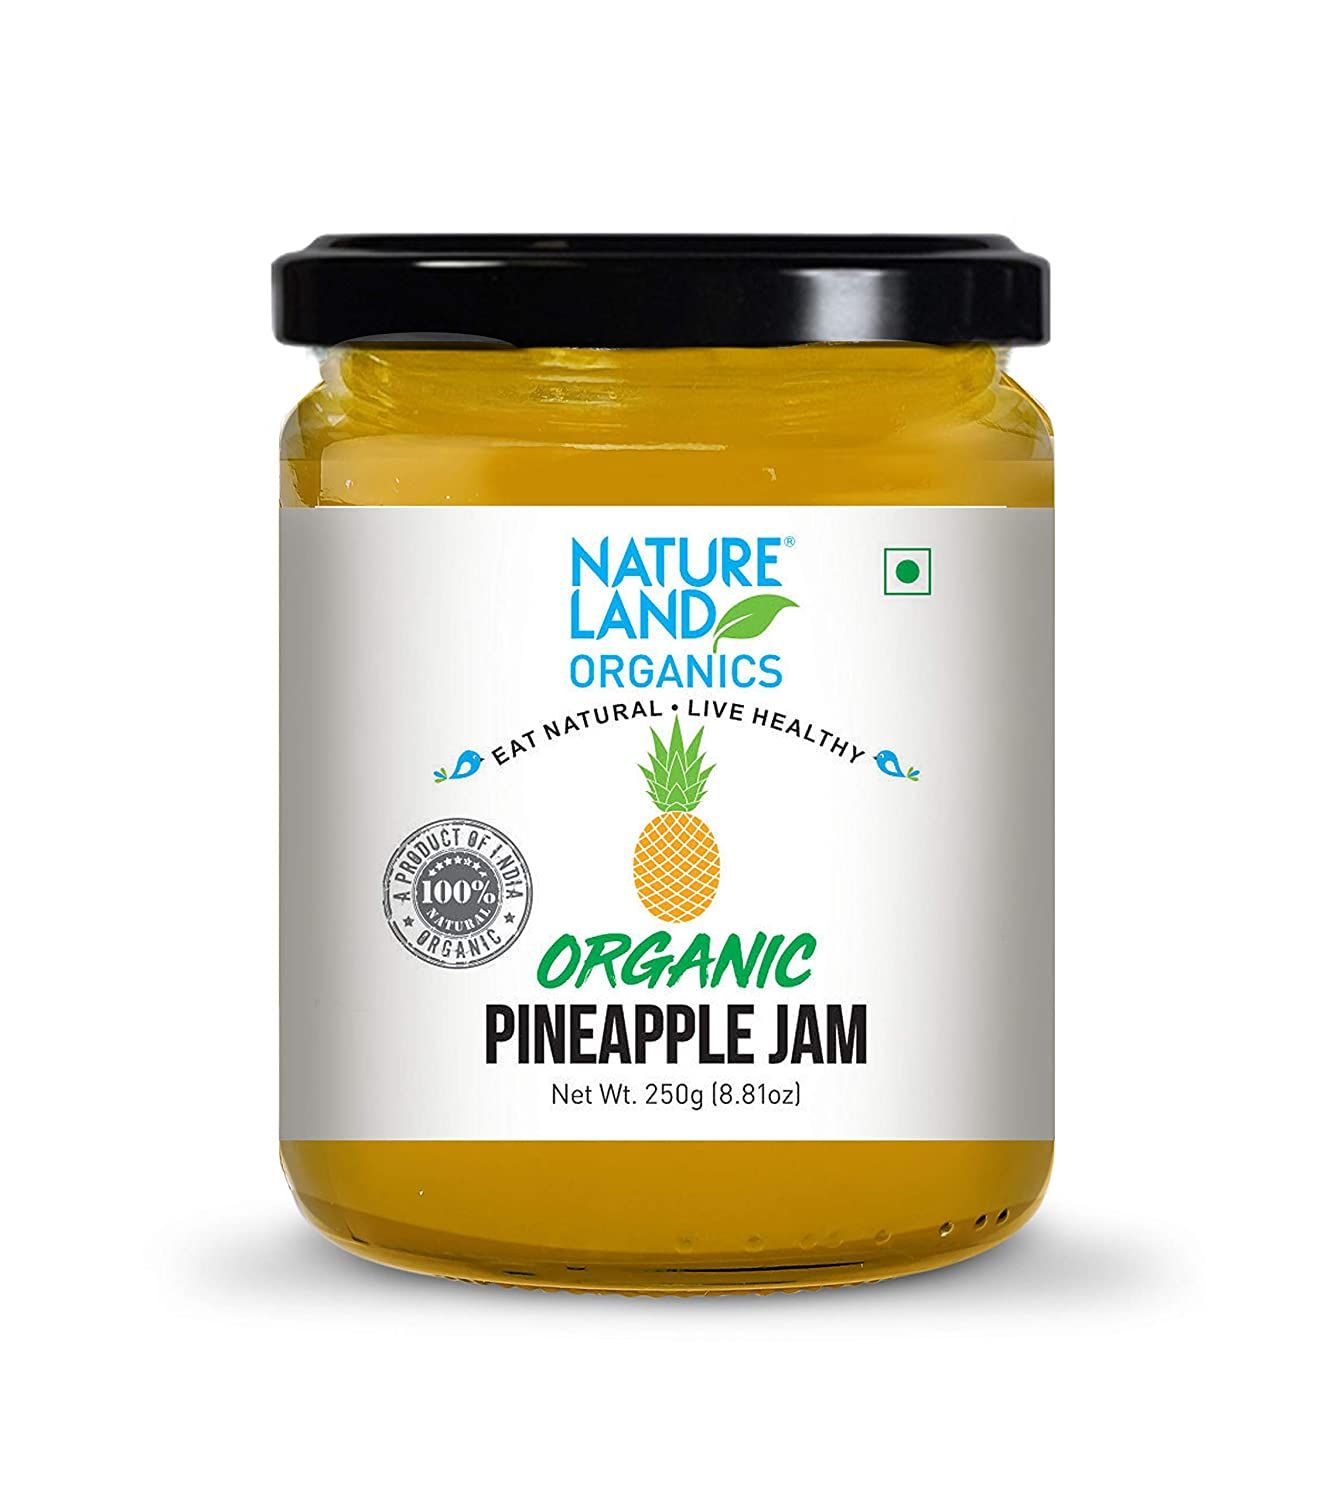 Natureland Organics Pineapple Jam Image